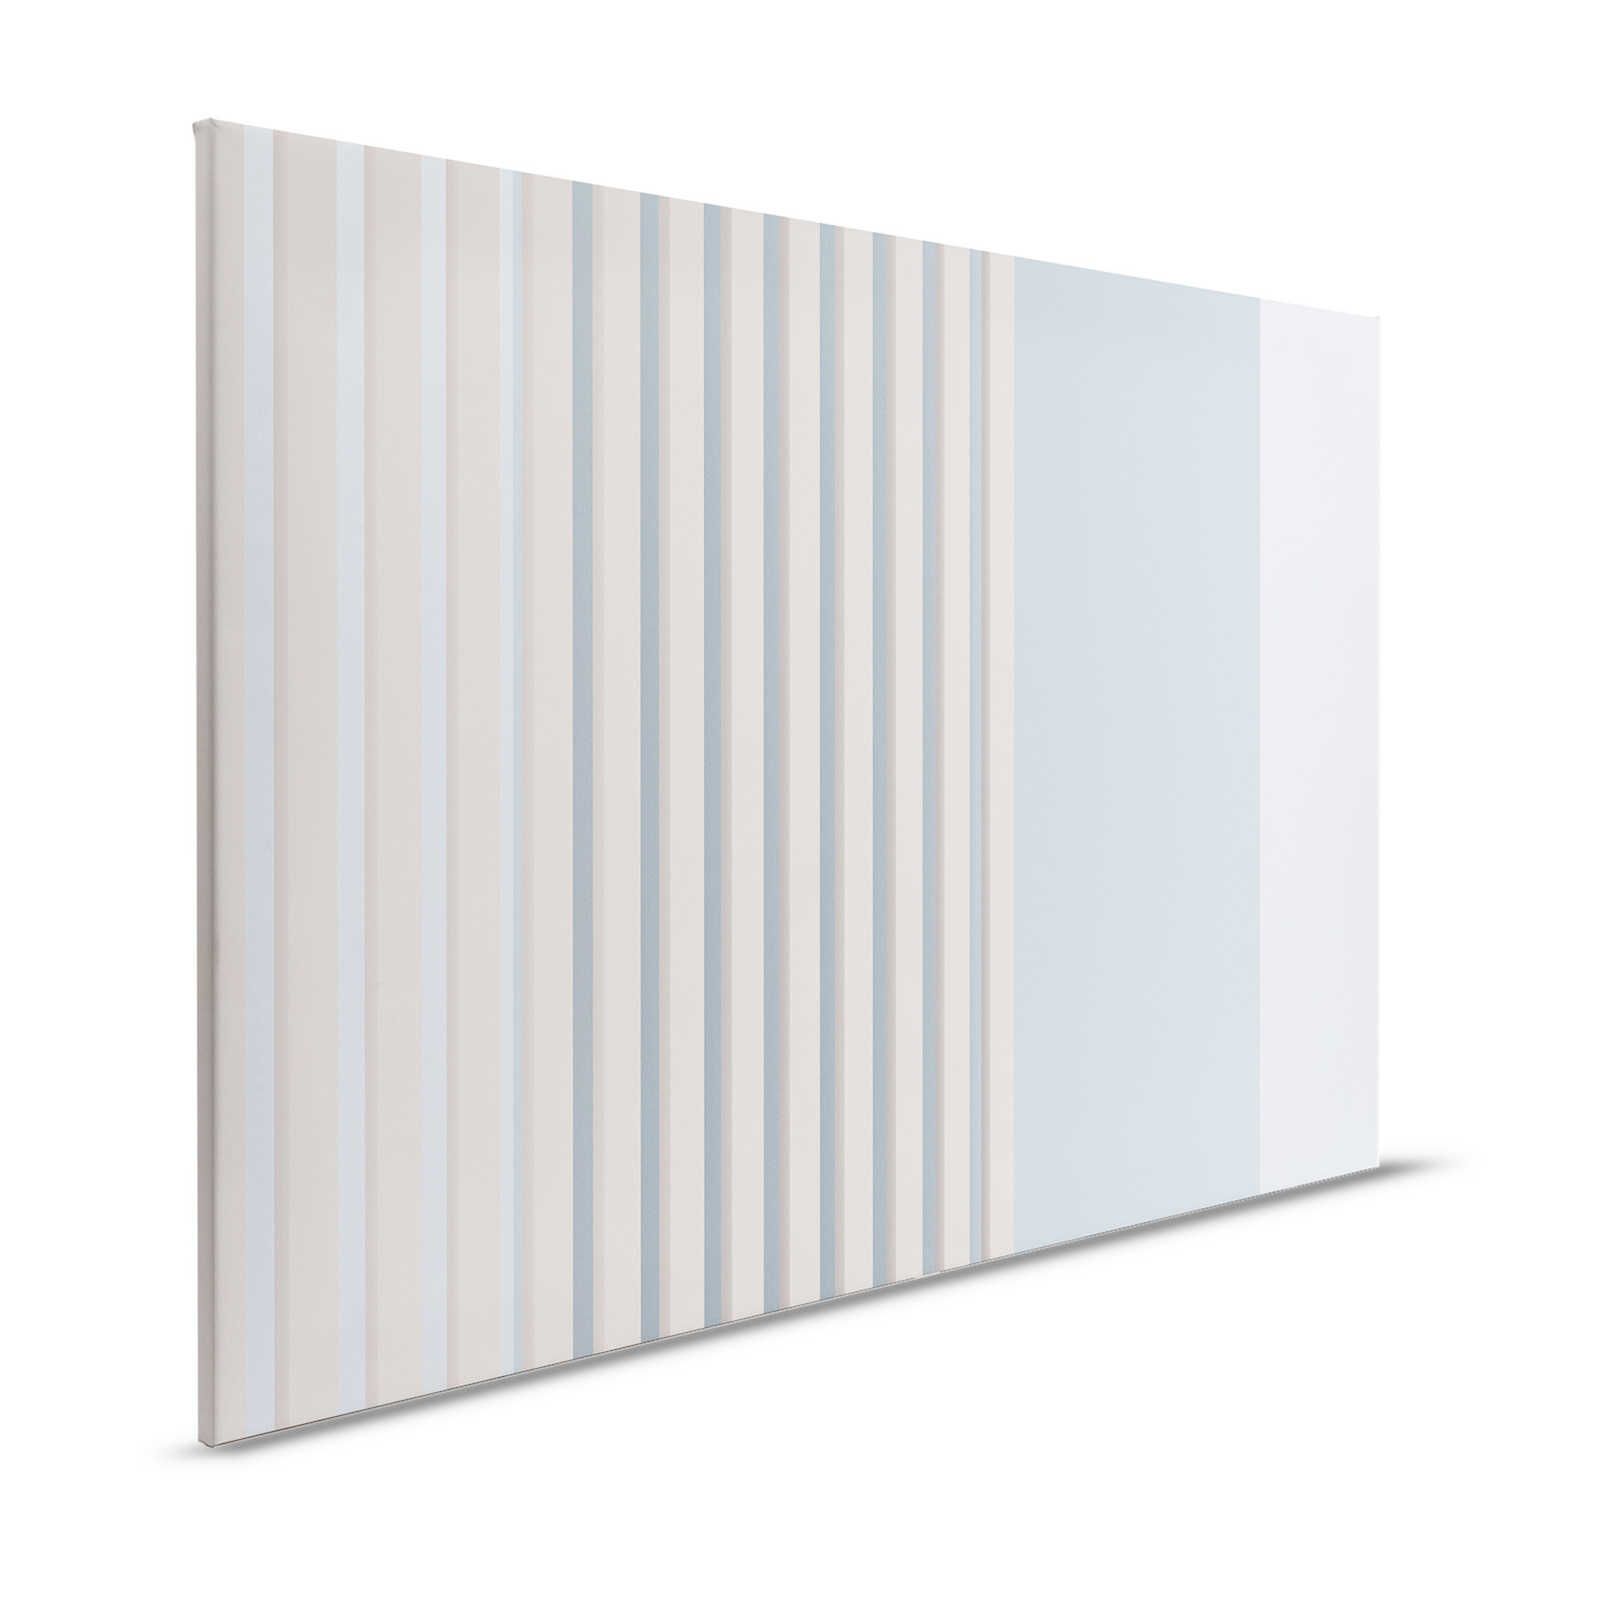 Illusion Room 2 - Leinwandbild 3D Streifen Design in Blau & Grau – 1,20 m x 0,80 m
